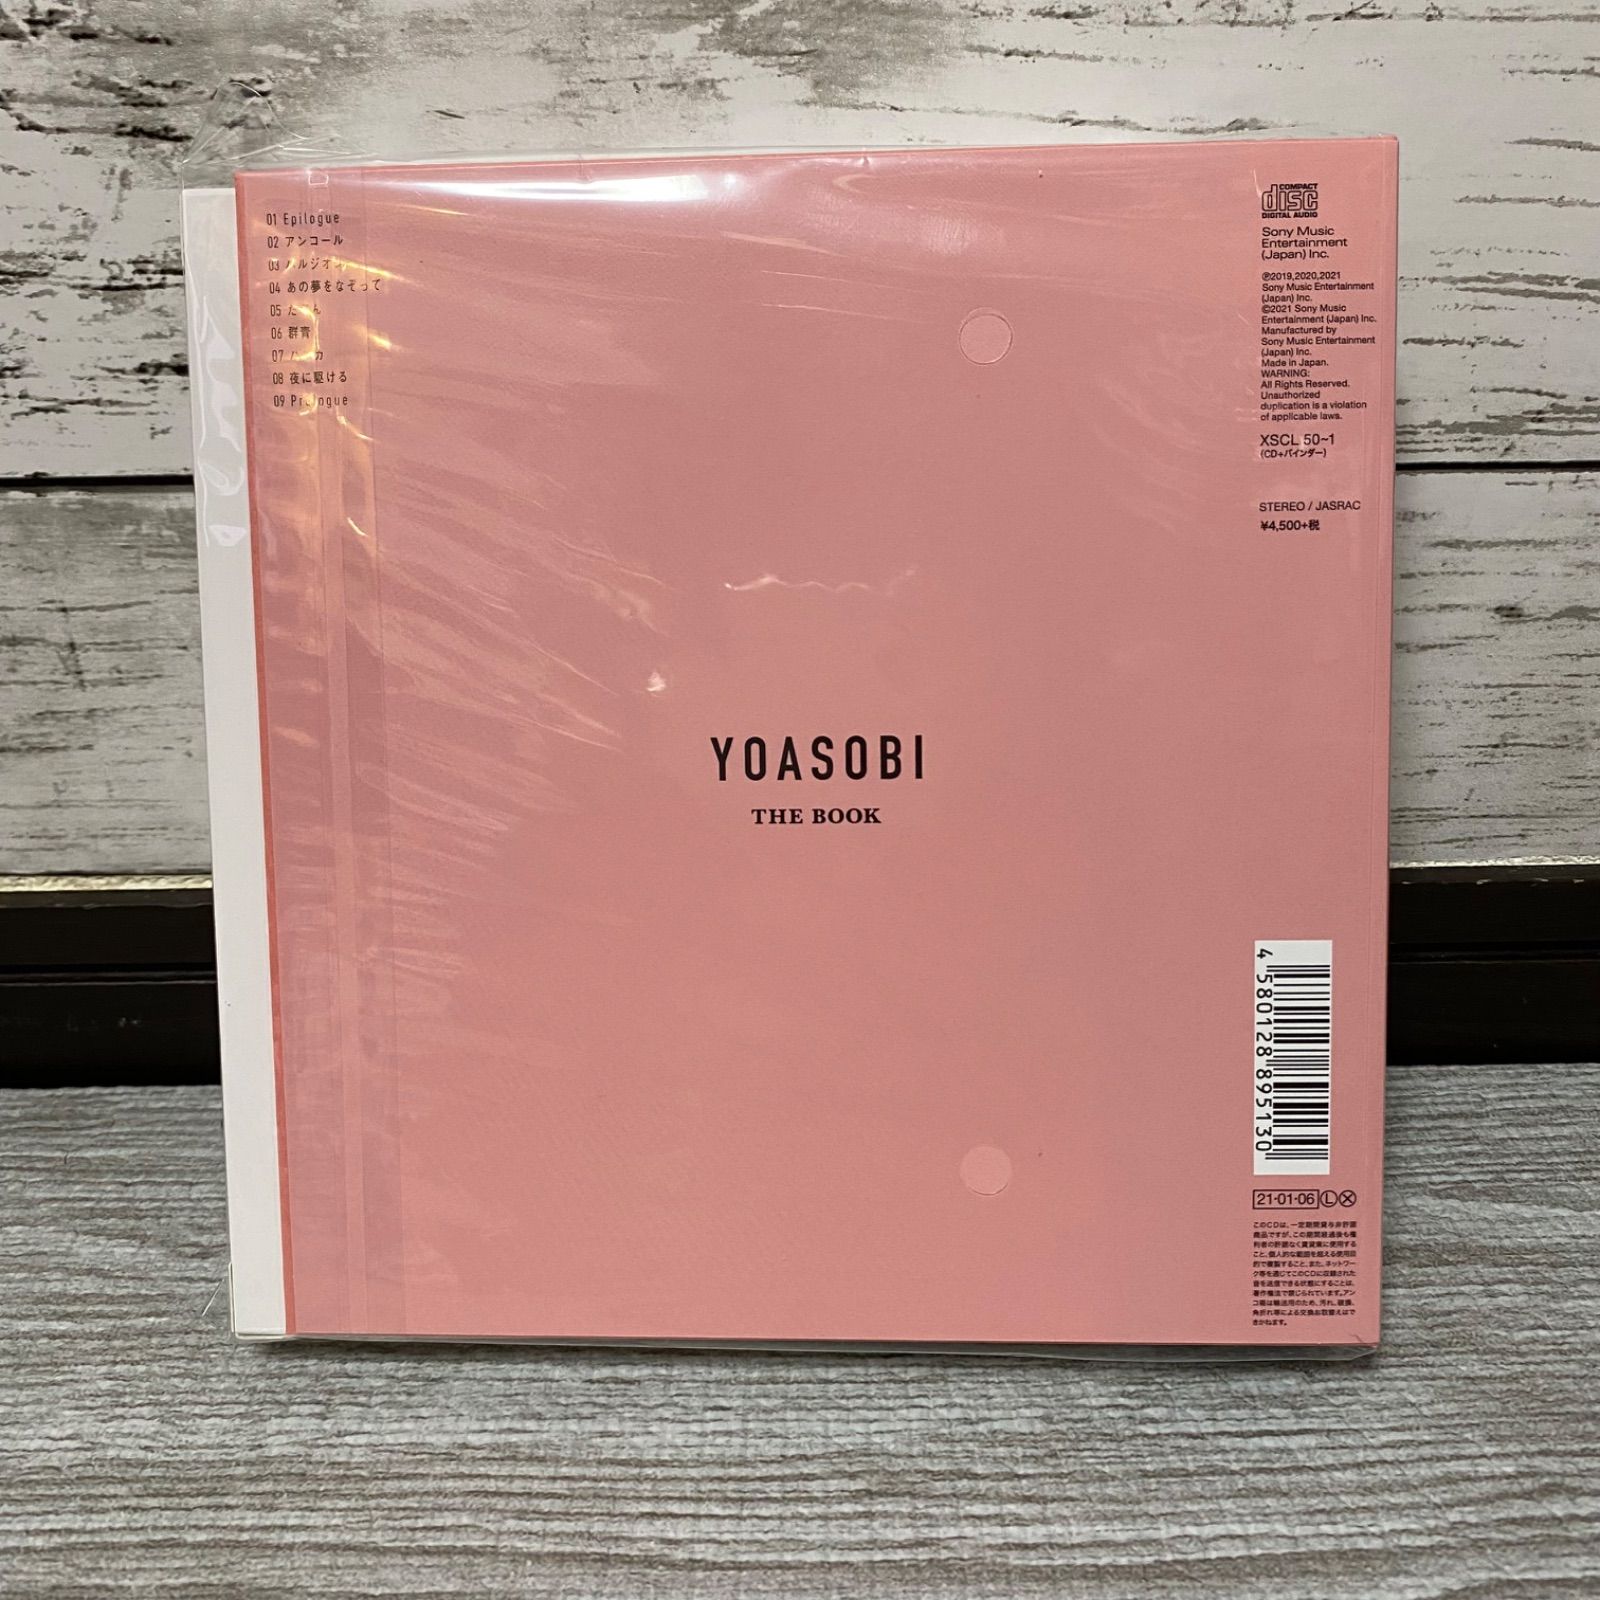 新品未開封】THE BOOK(完全生産限定盤)(CD+付属品)(特典なし)／YOASOBI